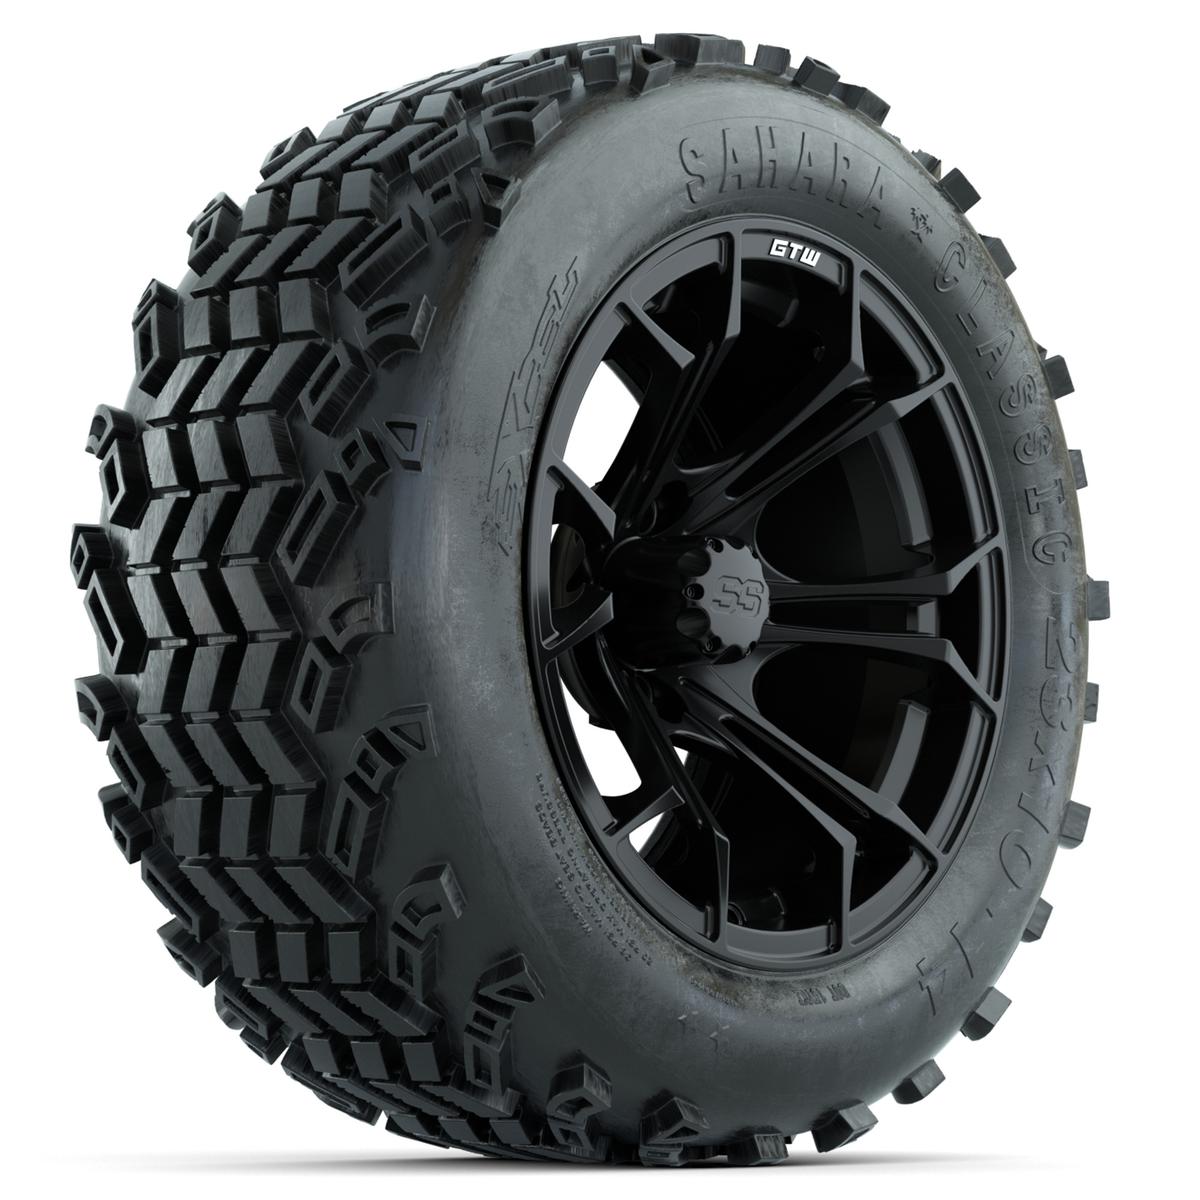 GTW Spyder Matte Black 14 in Wheels with 23x10-14 Sahara Classic All-Terrain Tires – Full Set